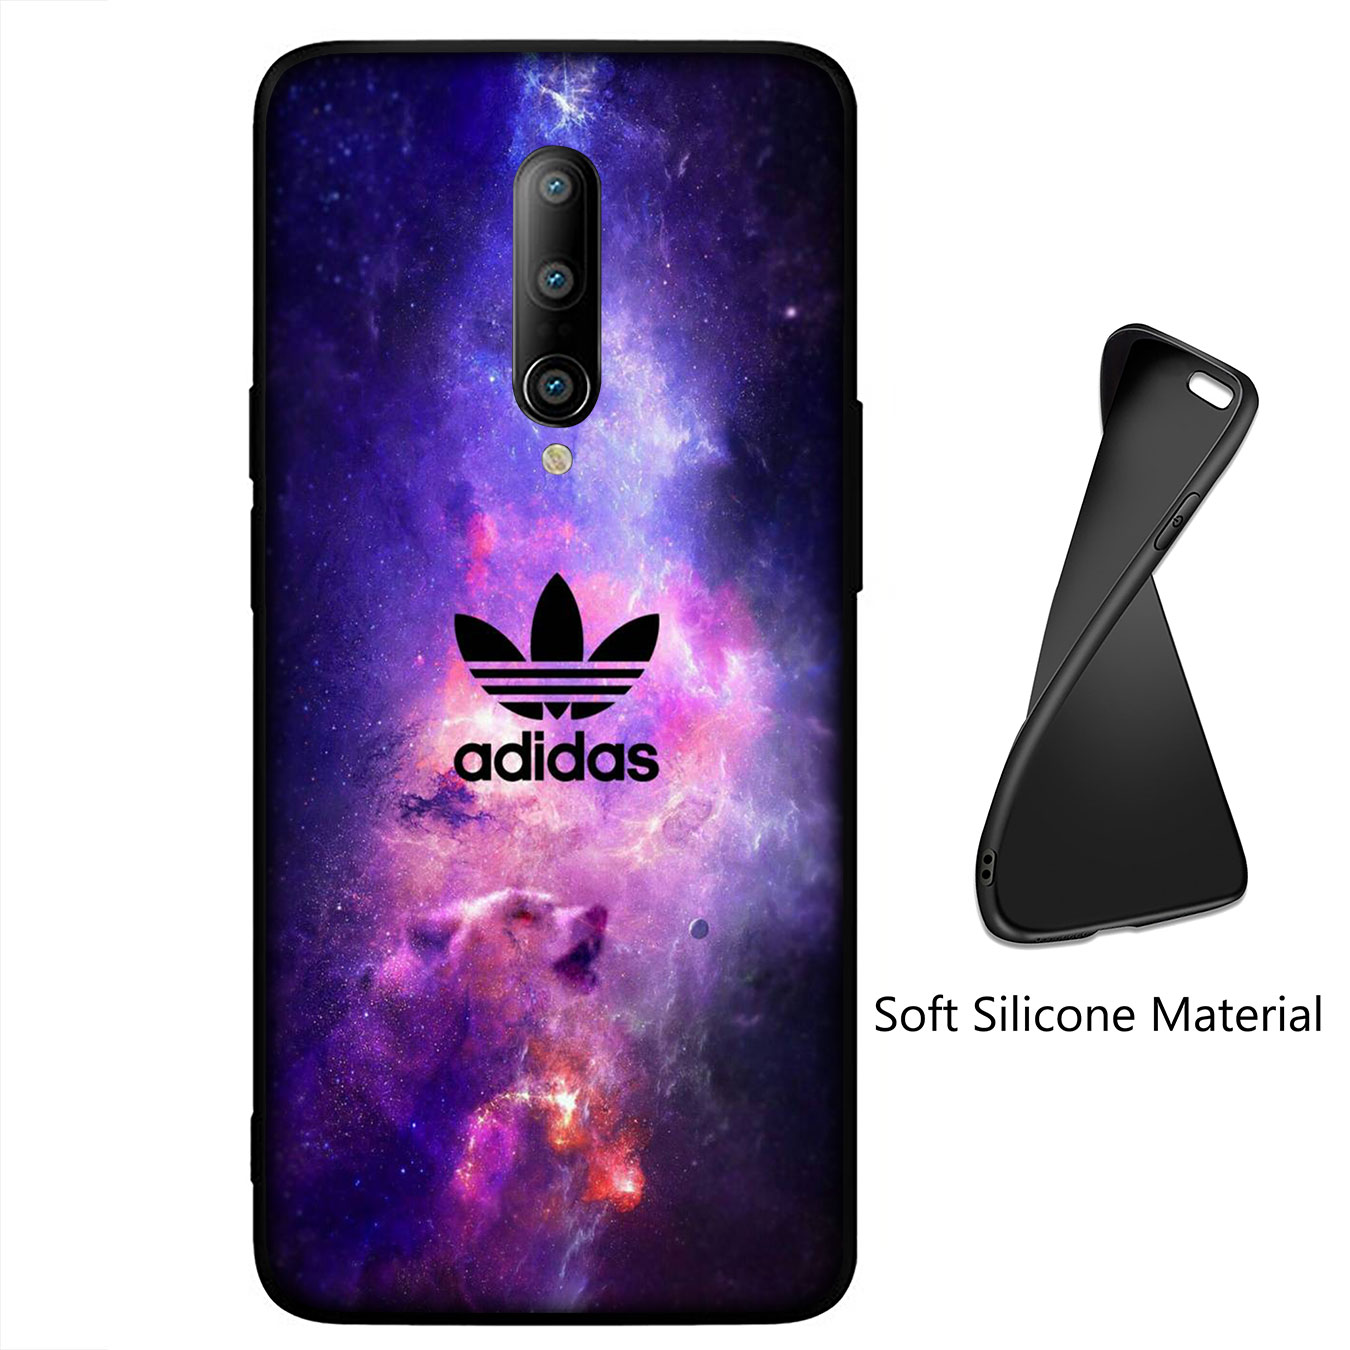 Ốp điện thoại silicon mềm hình logo Adidas B7 cho Samsung Galaxy S21 Ultra S8 Plus M31 M51 A11 A31 A51 S21Plus